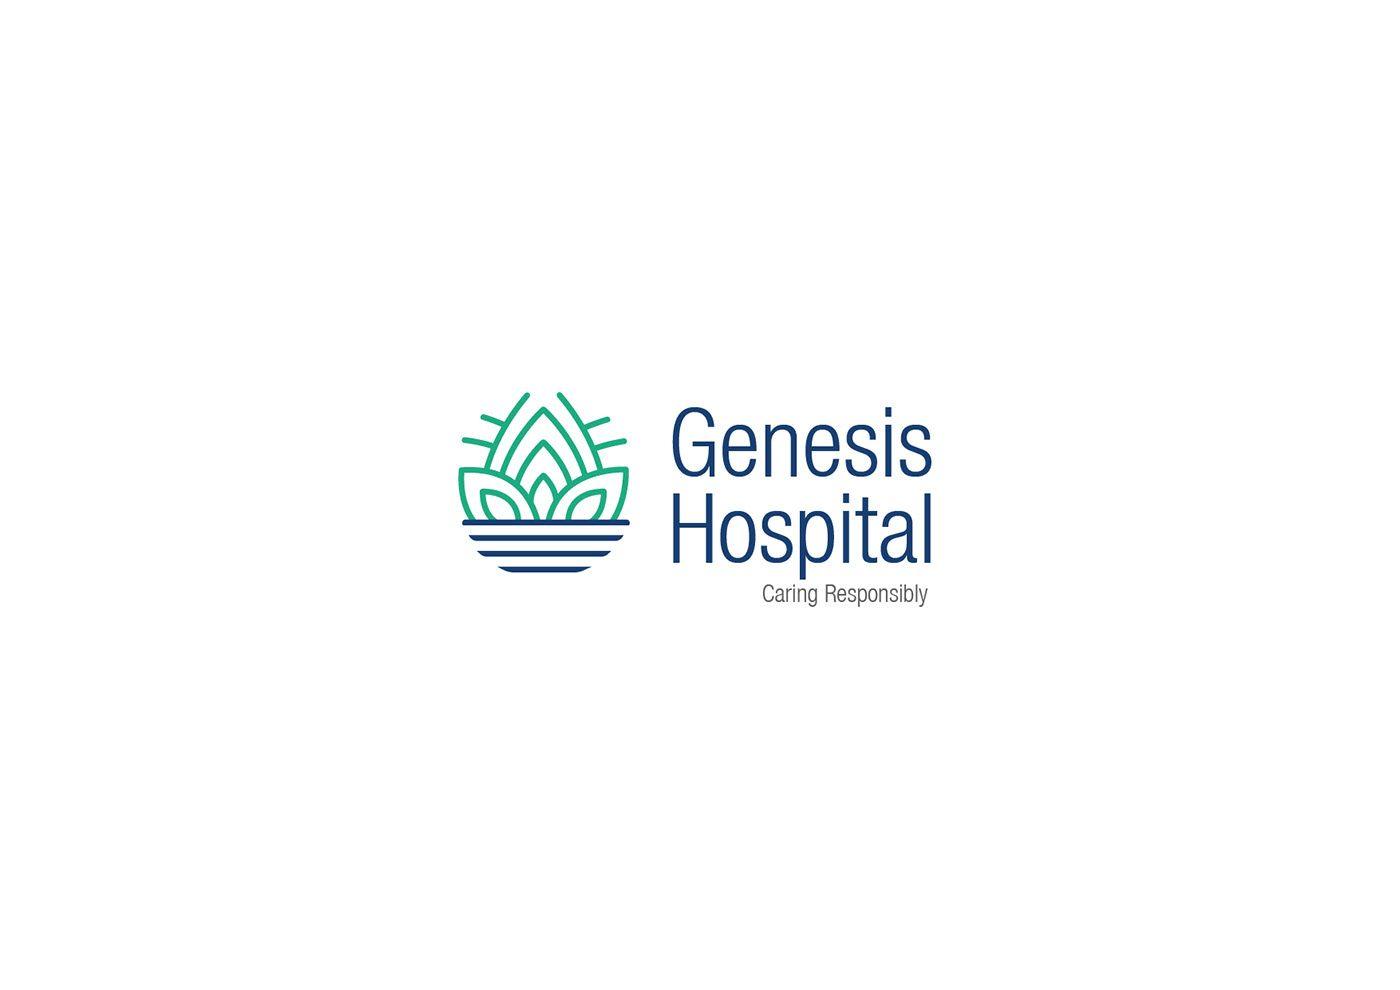 Genesis Hospital Logo - Genesis Hospital